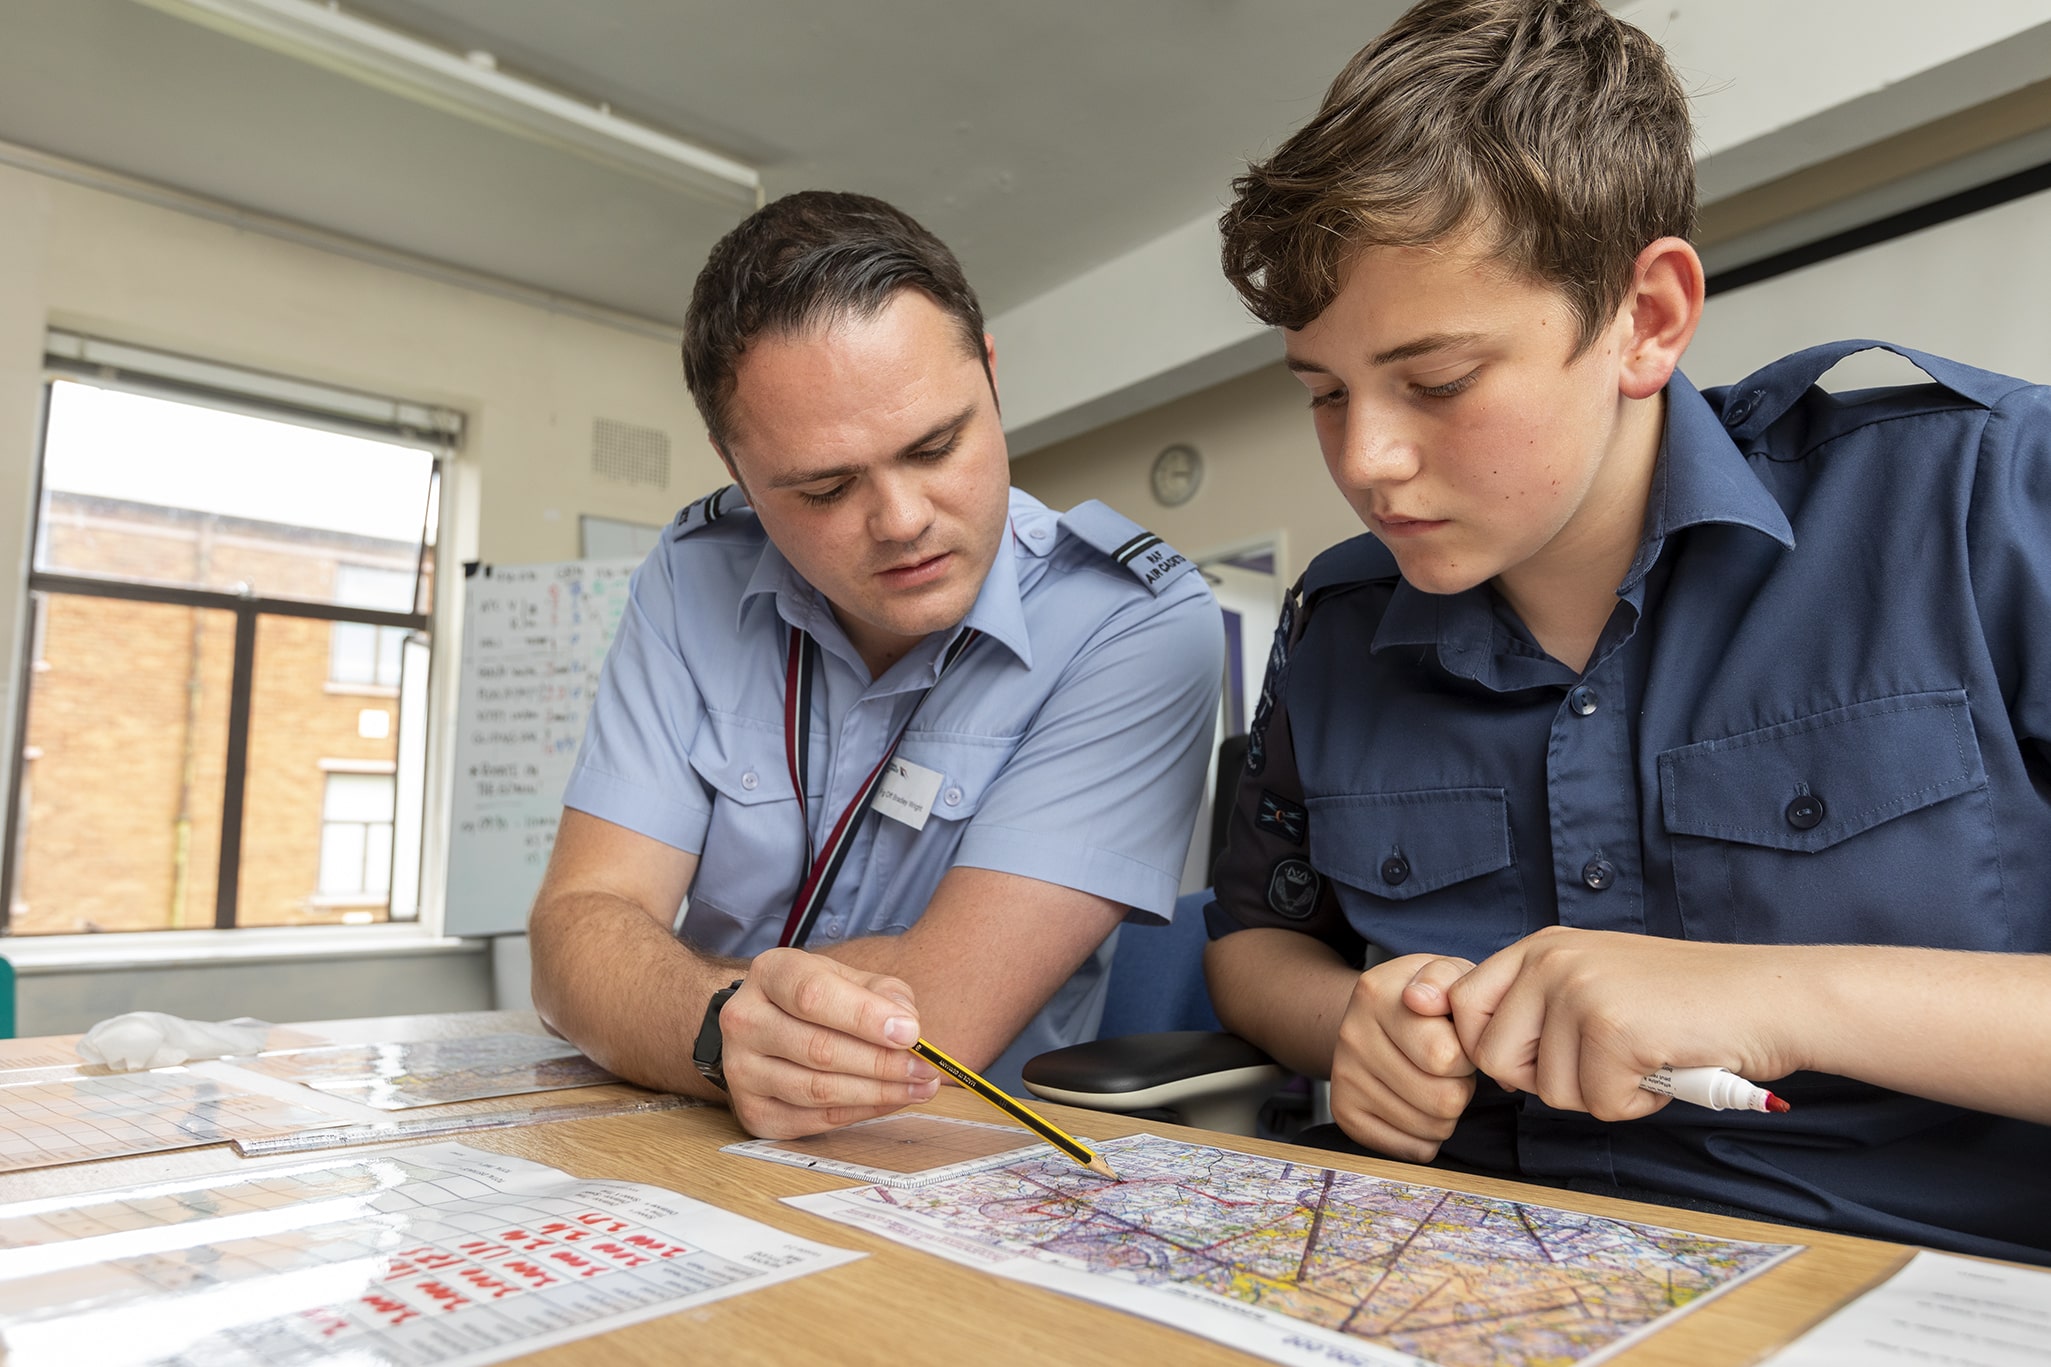 Volunteer teaching cadet about maps